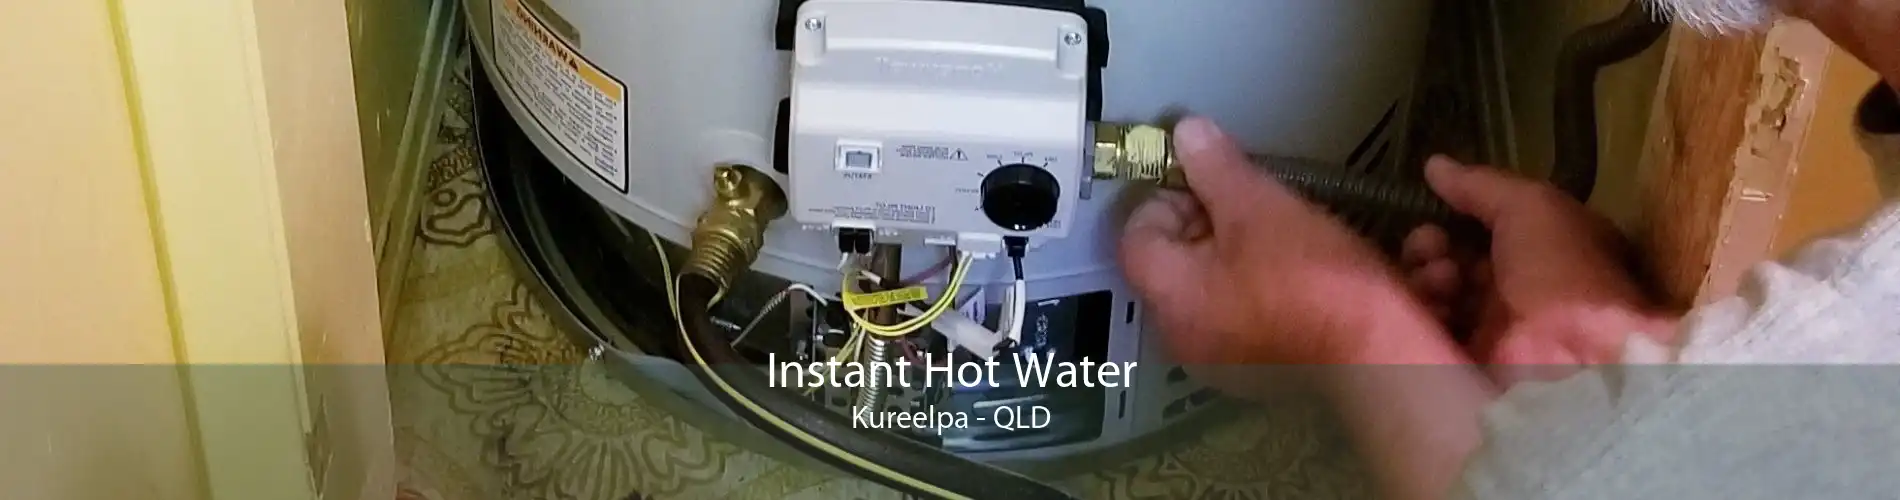 Instant Hot Water Kureelpa - QLD